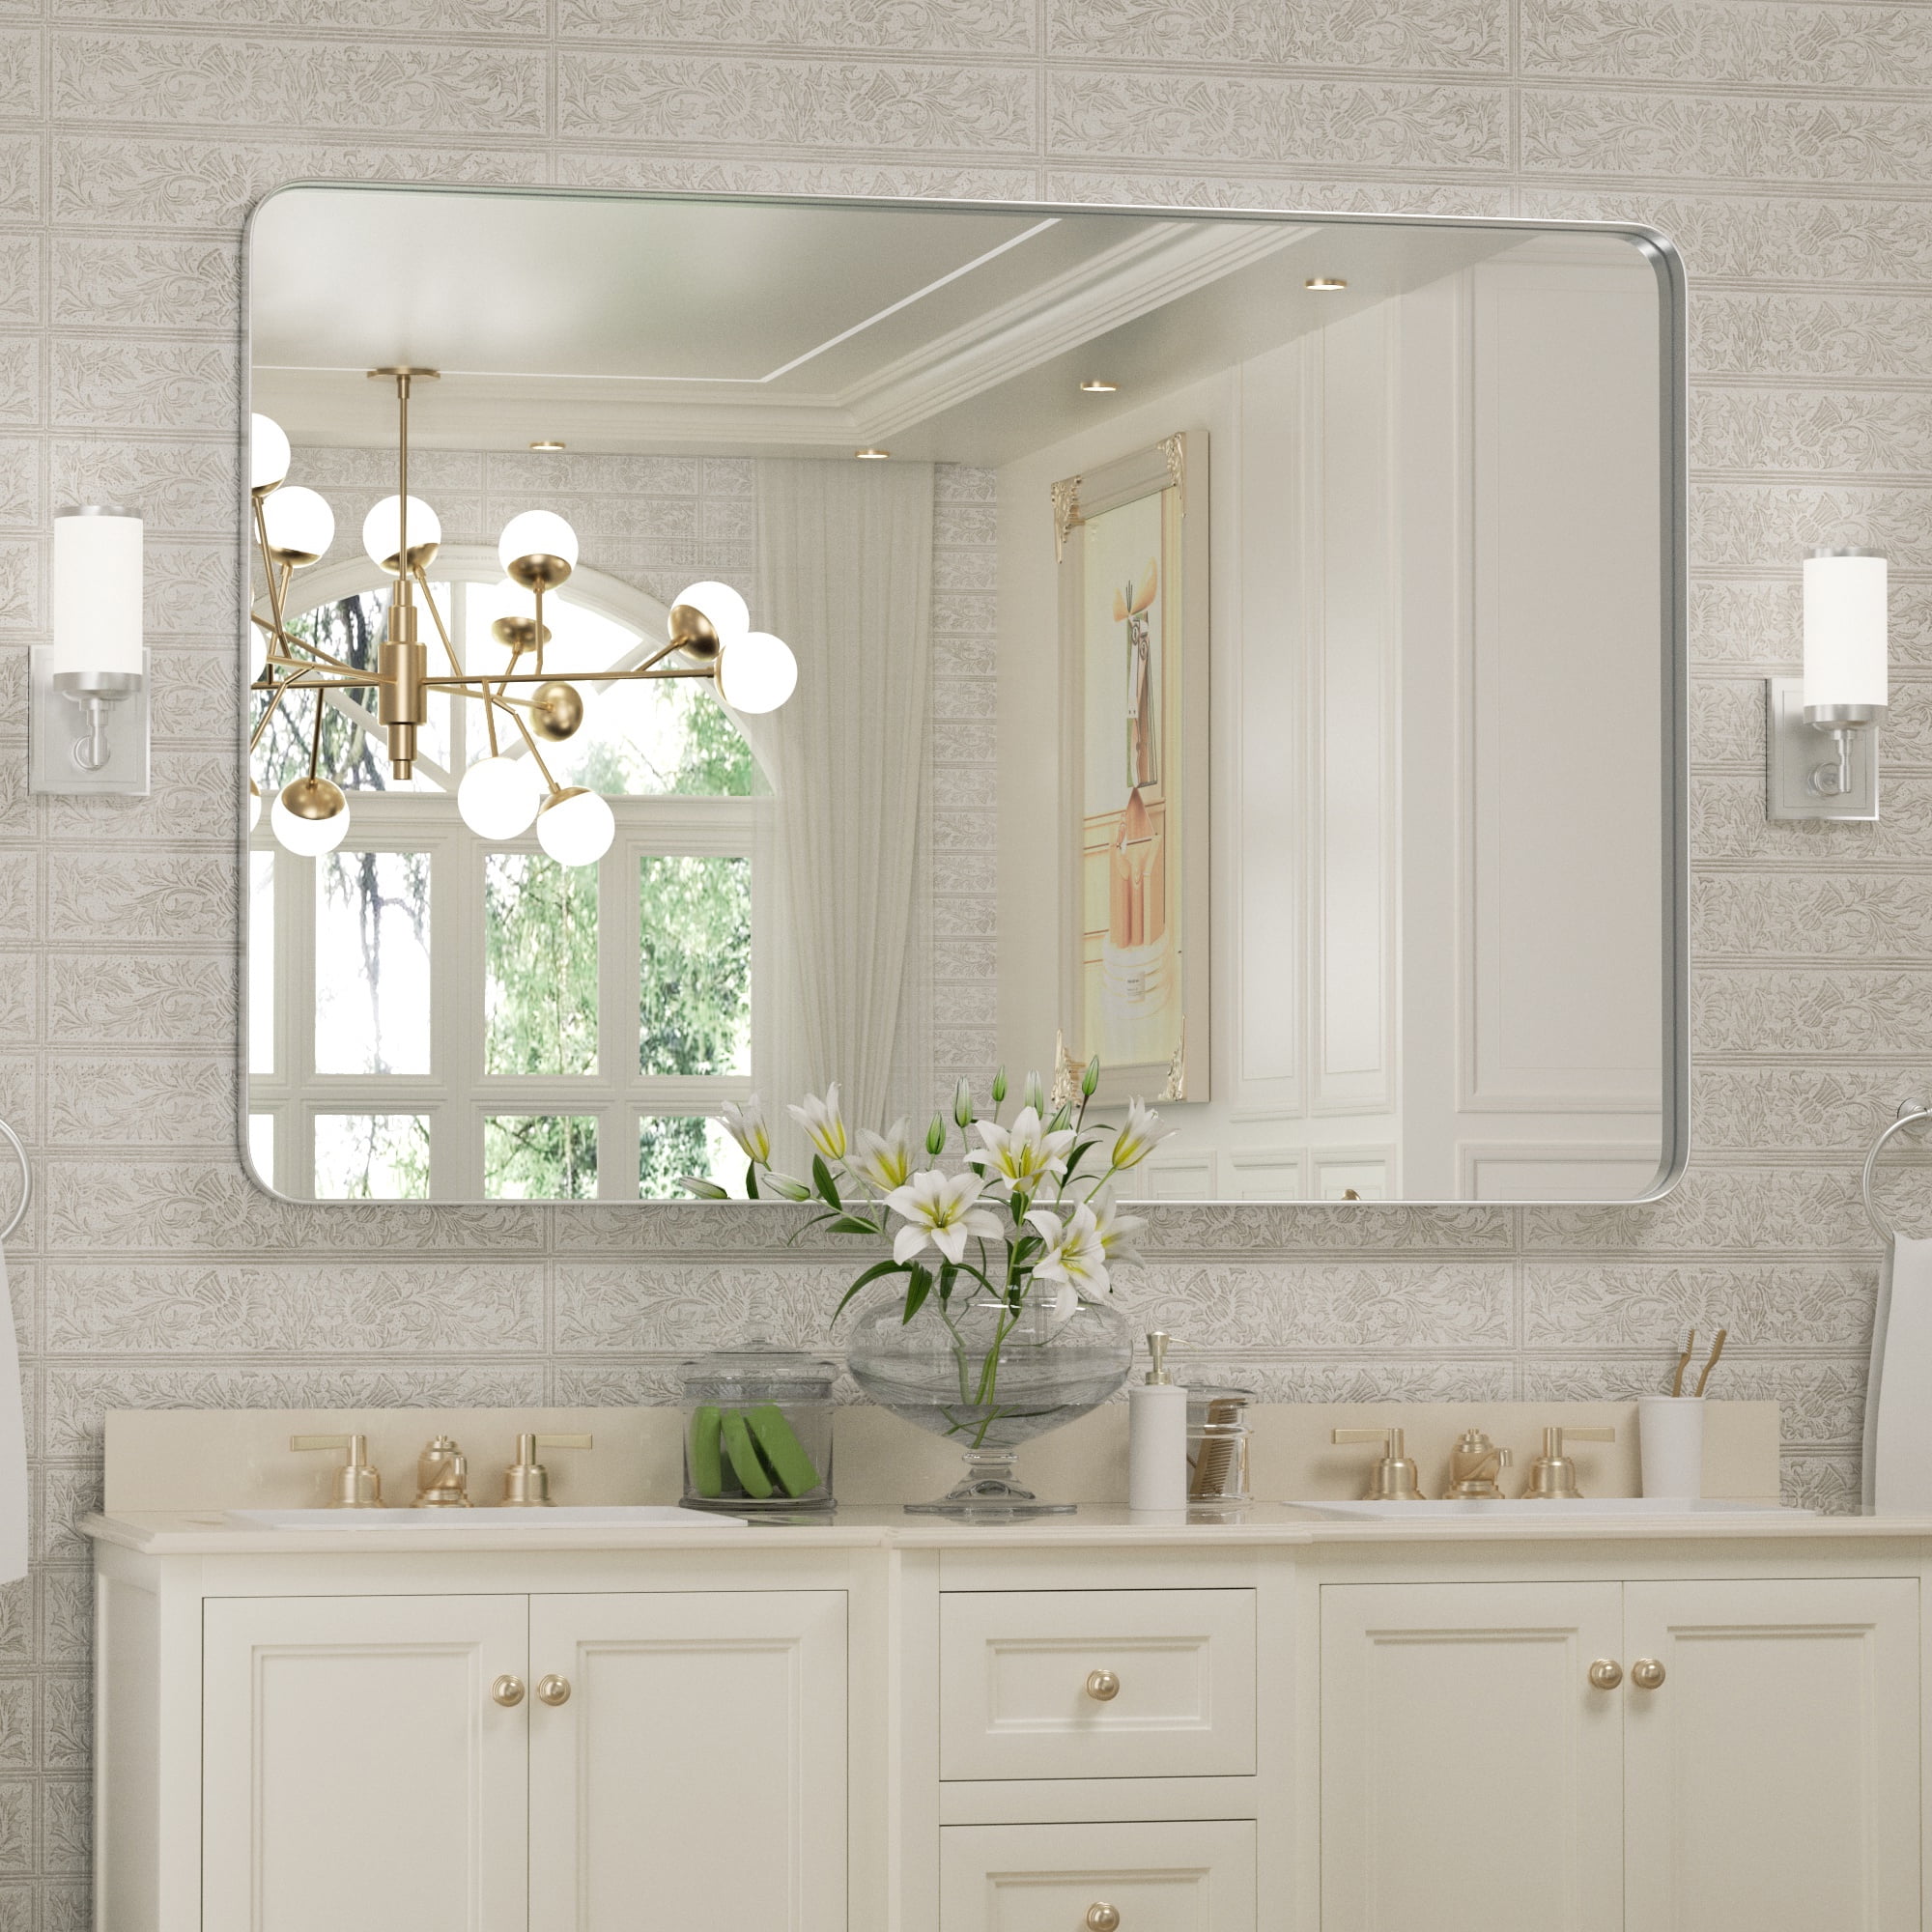 Clavies Bathroom Mirror, 22 x 30 Vanity Wall Mirror, Golden Oval